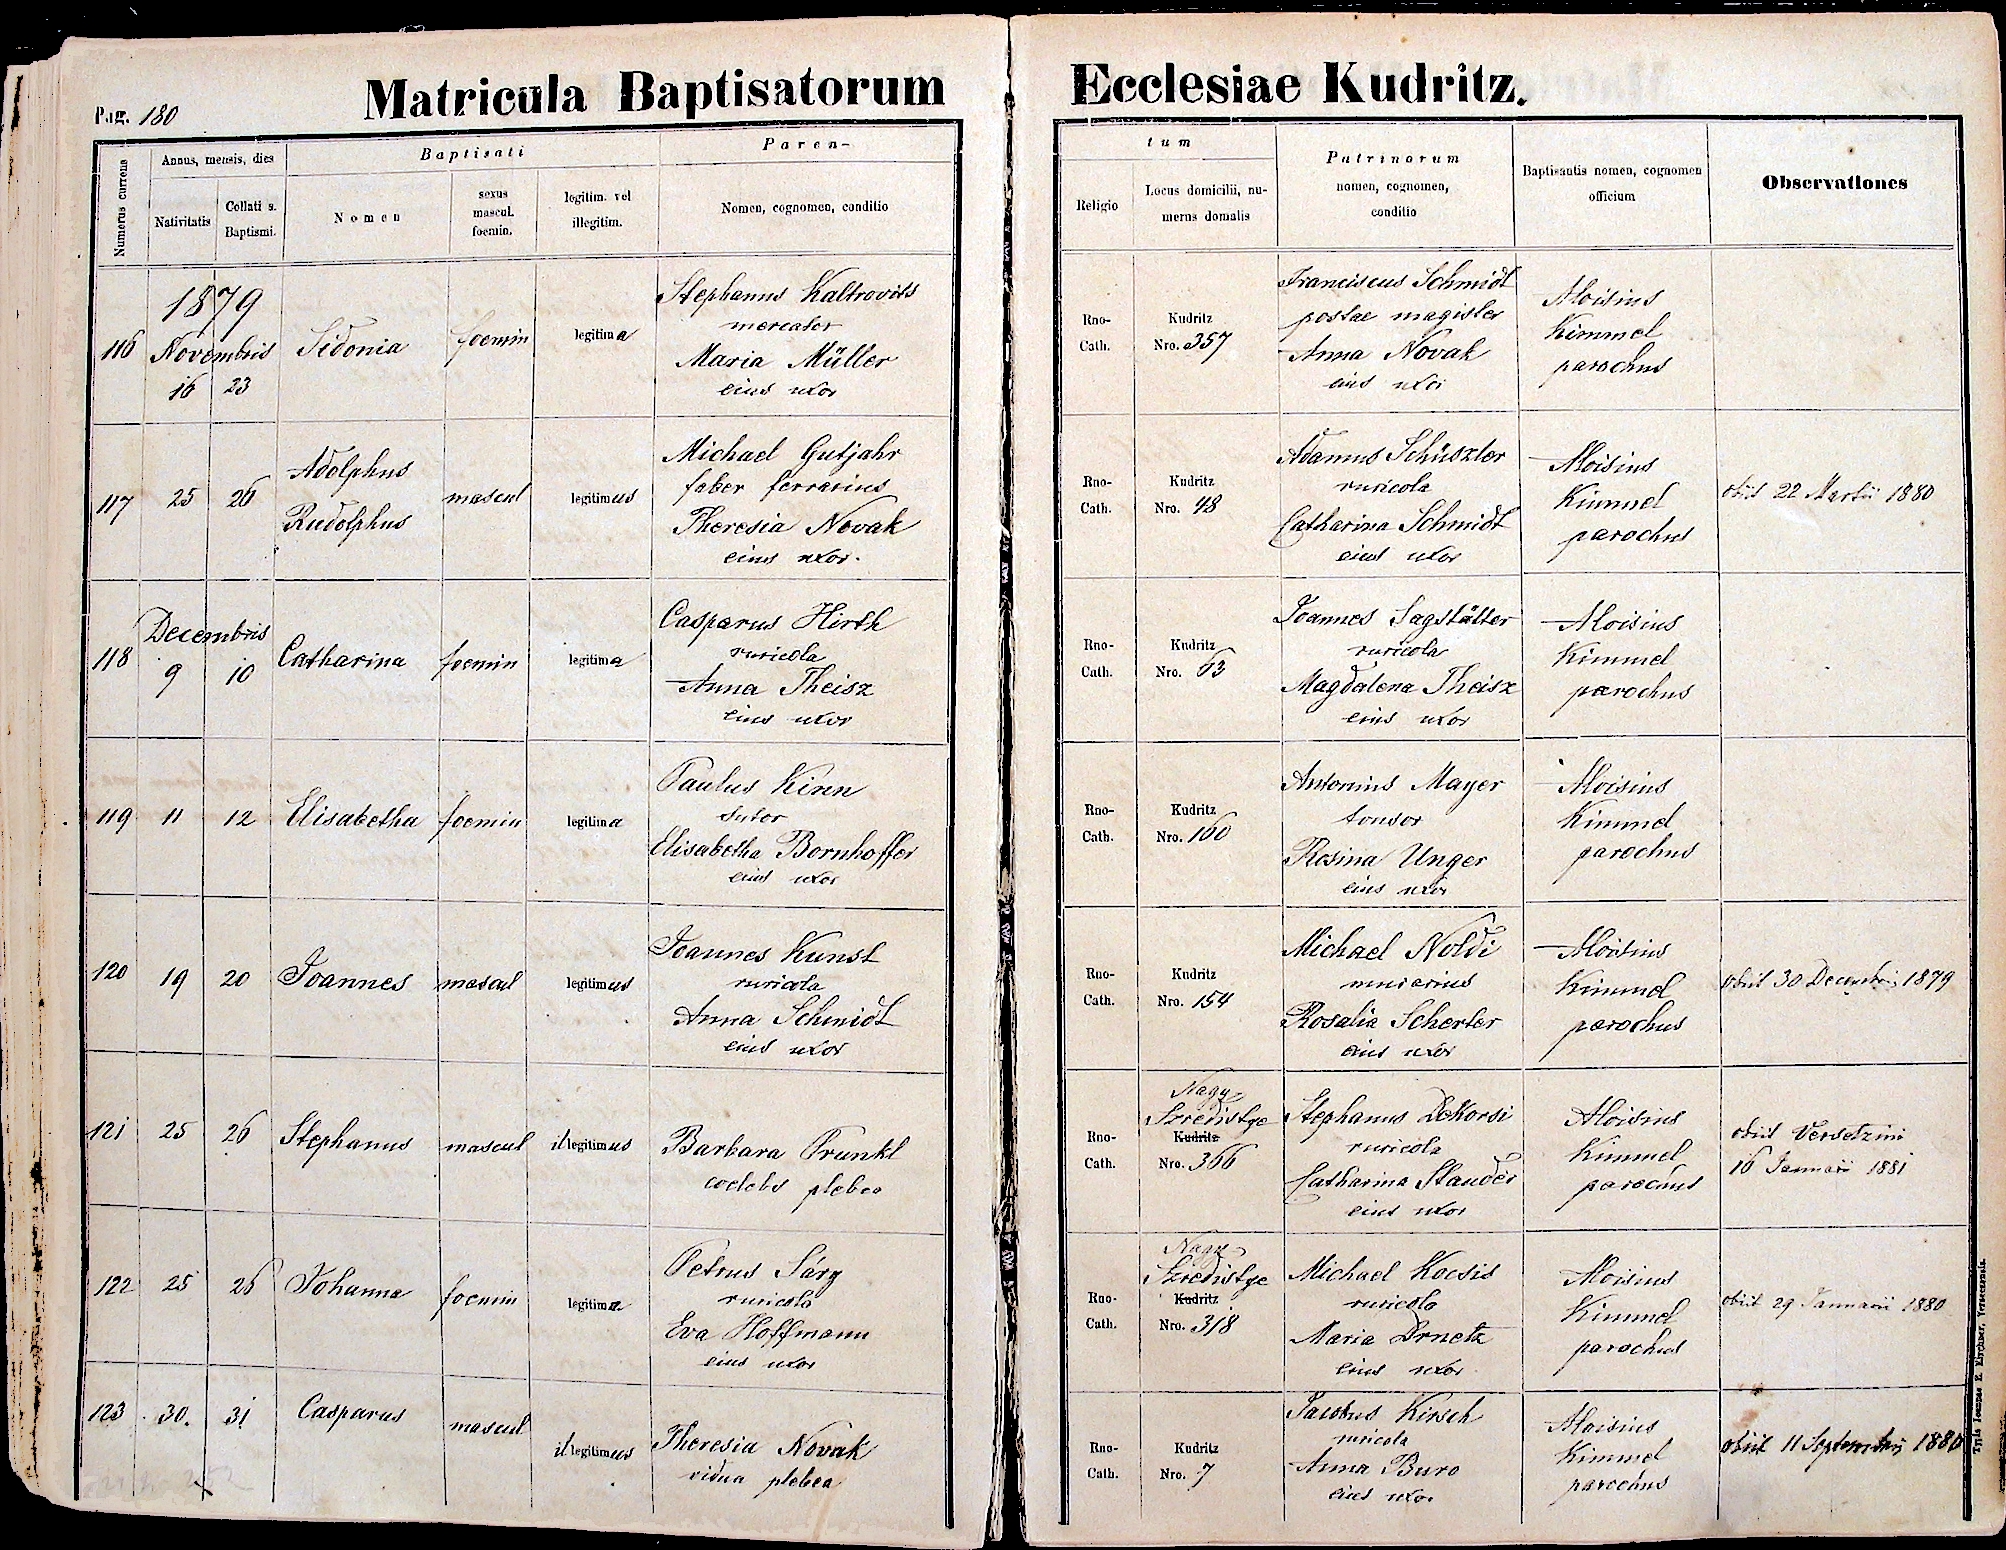 images/church_records/BIRTHS/1870-1879B/1879/180